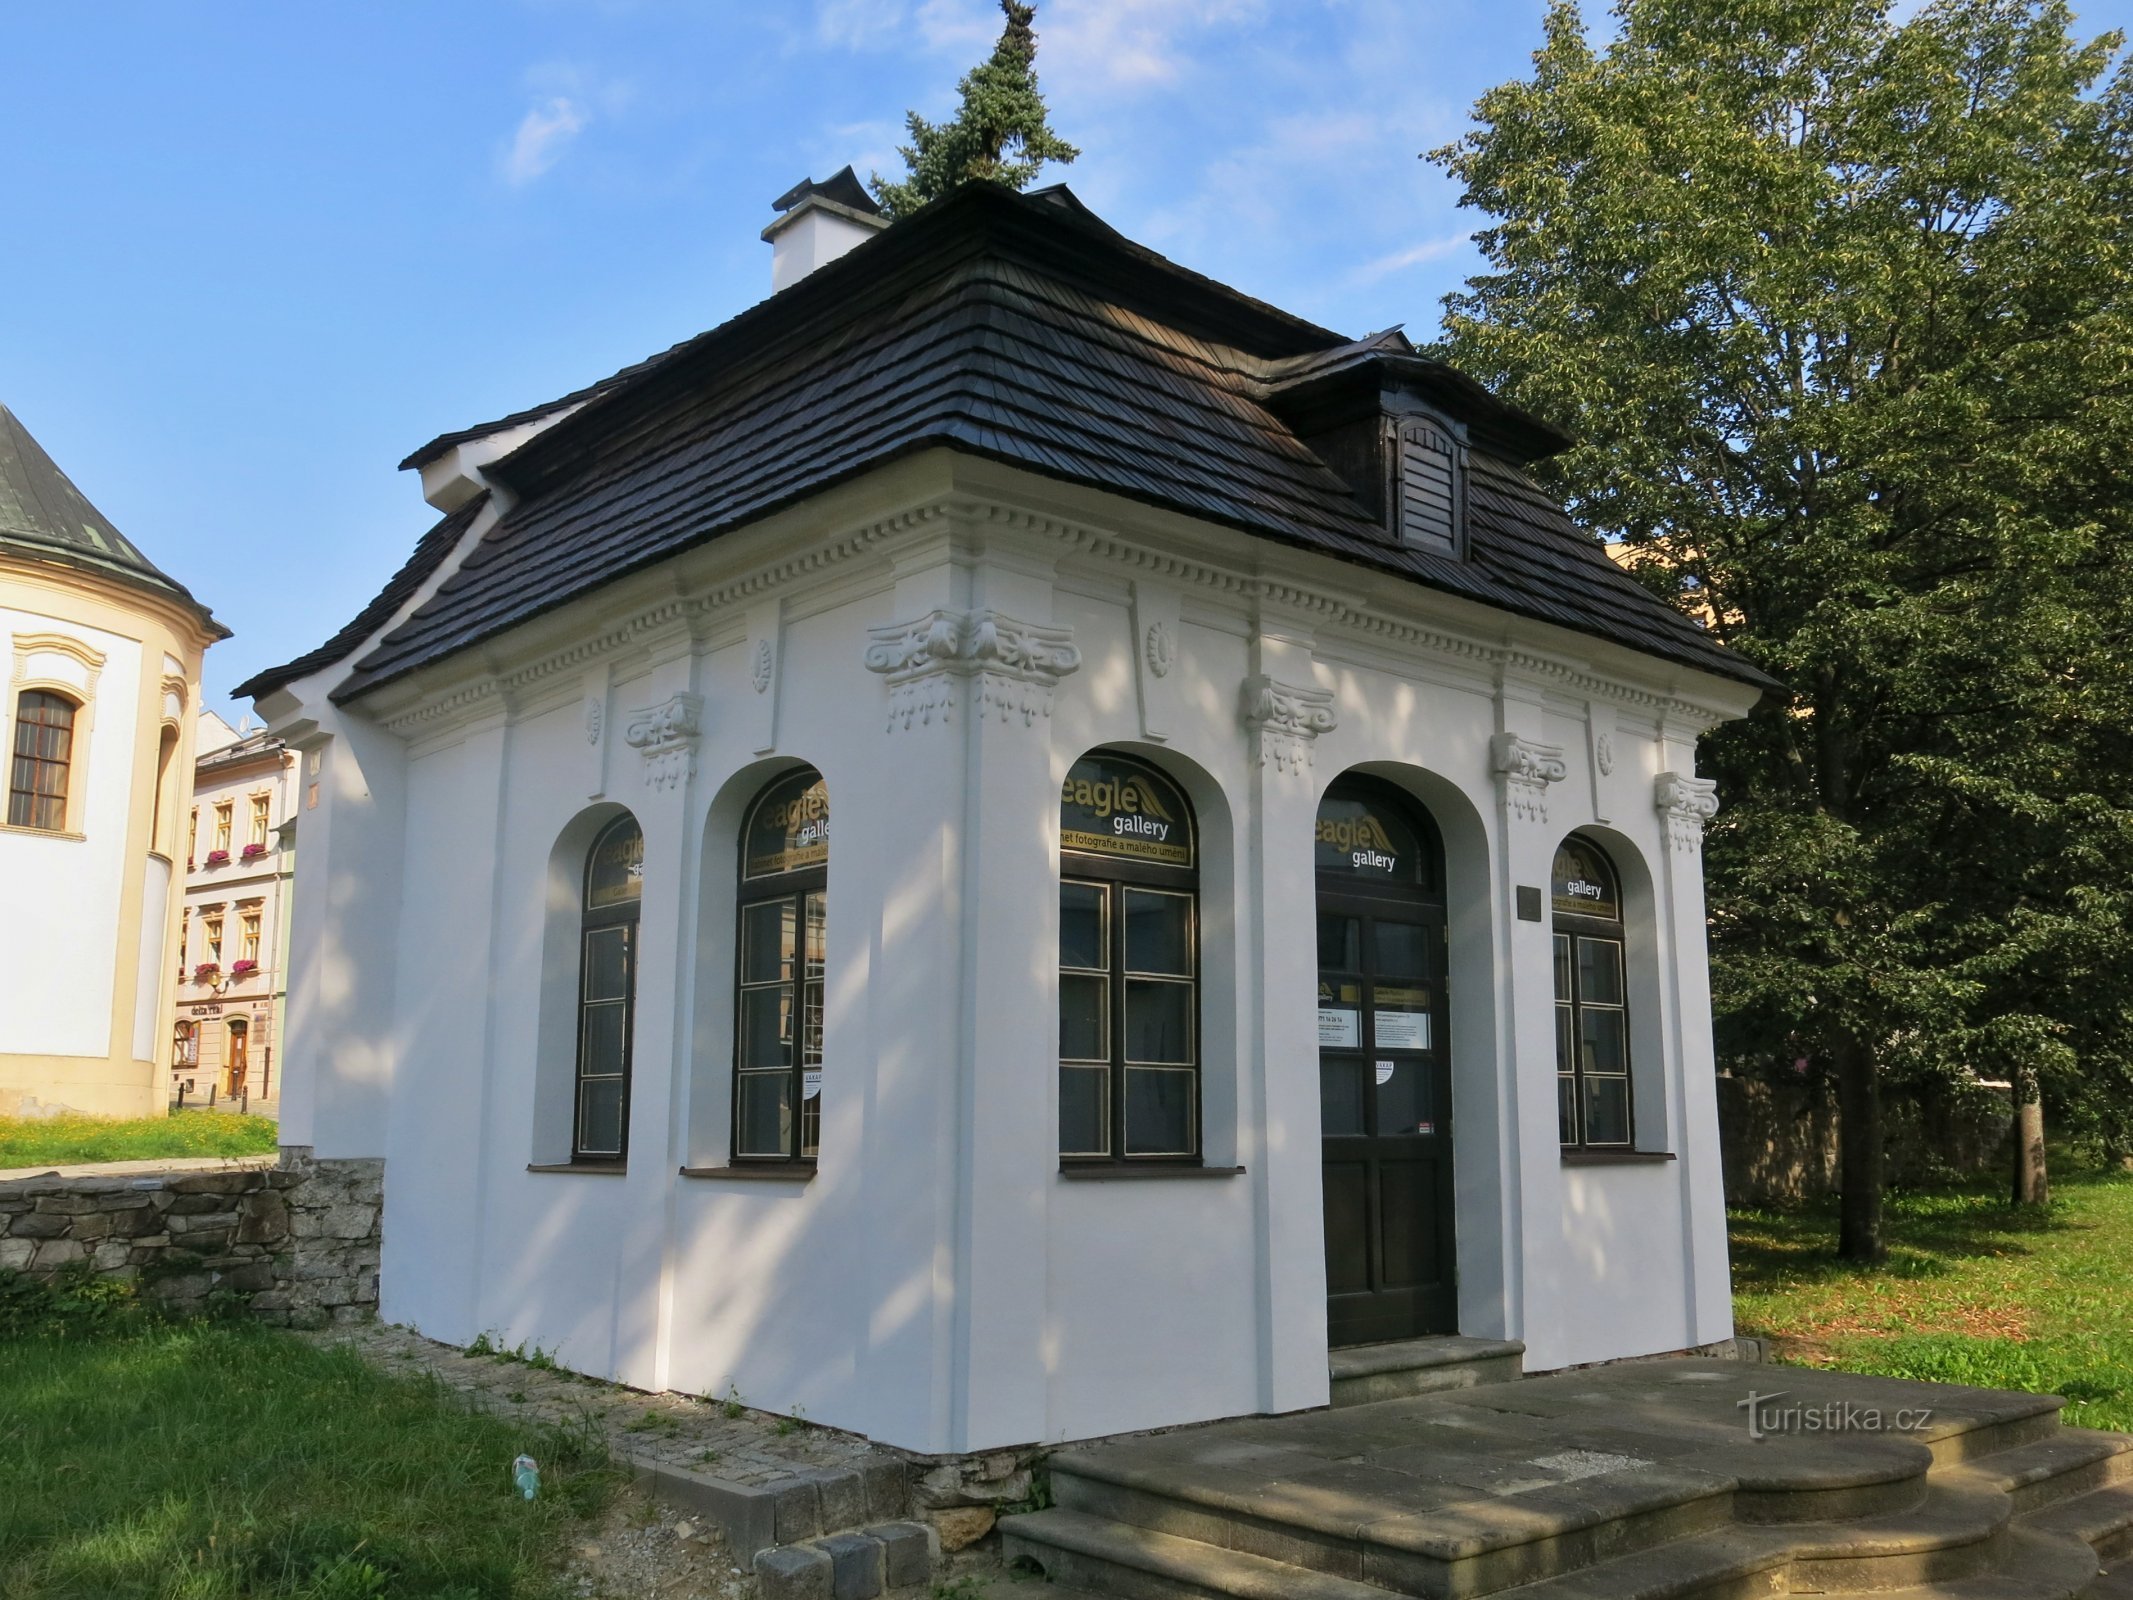 Šumperk – Galerie Pavilon, the first self-service gallery in the Czech Republic